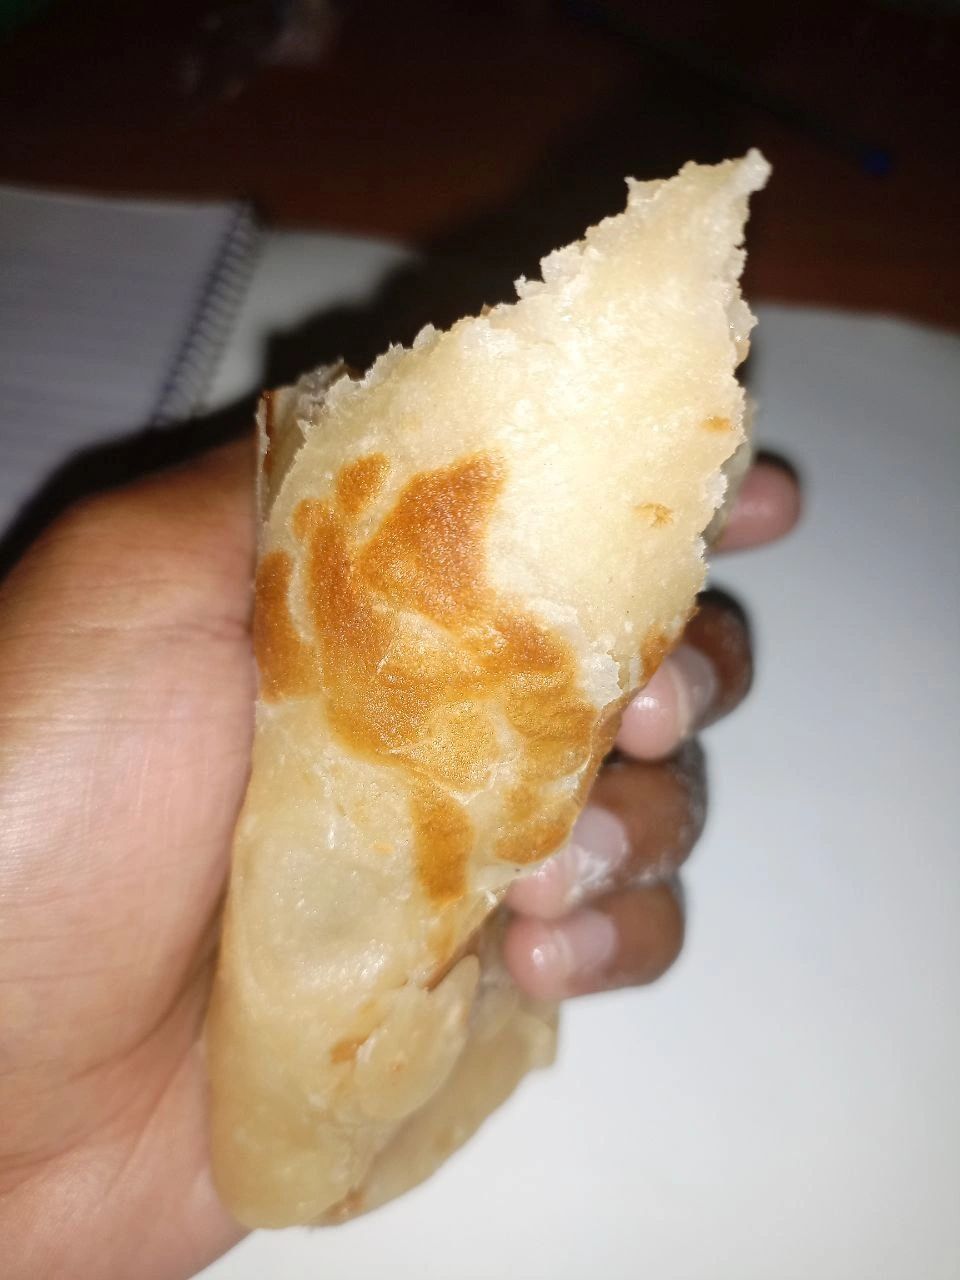 Soft chapati